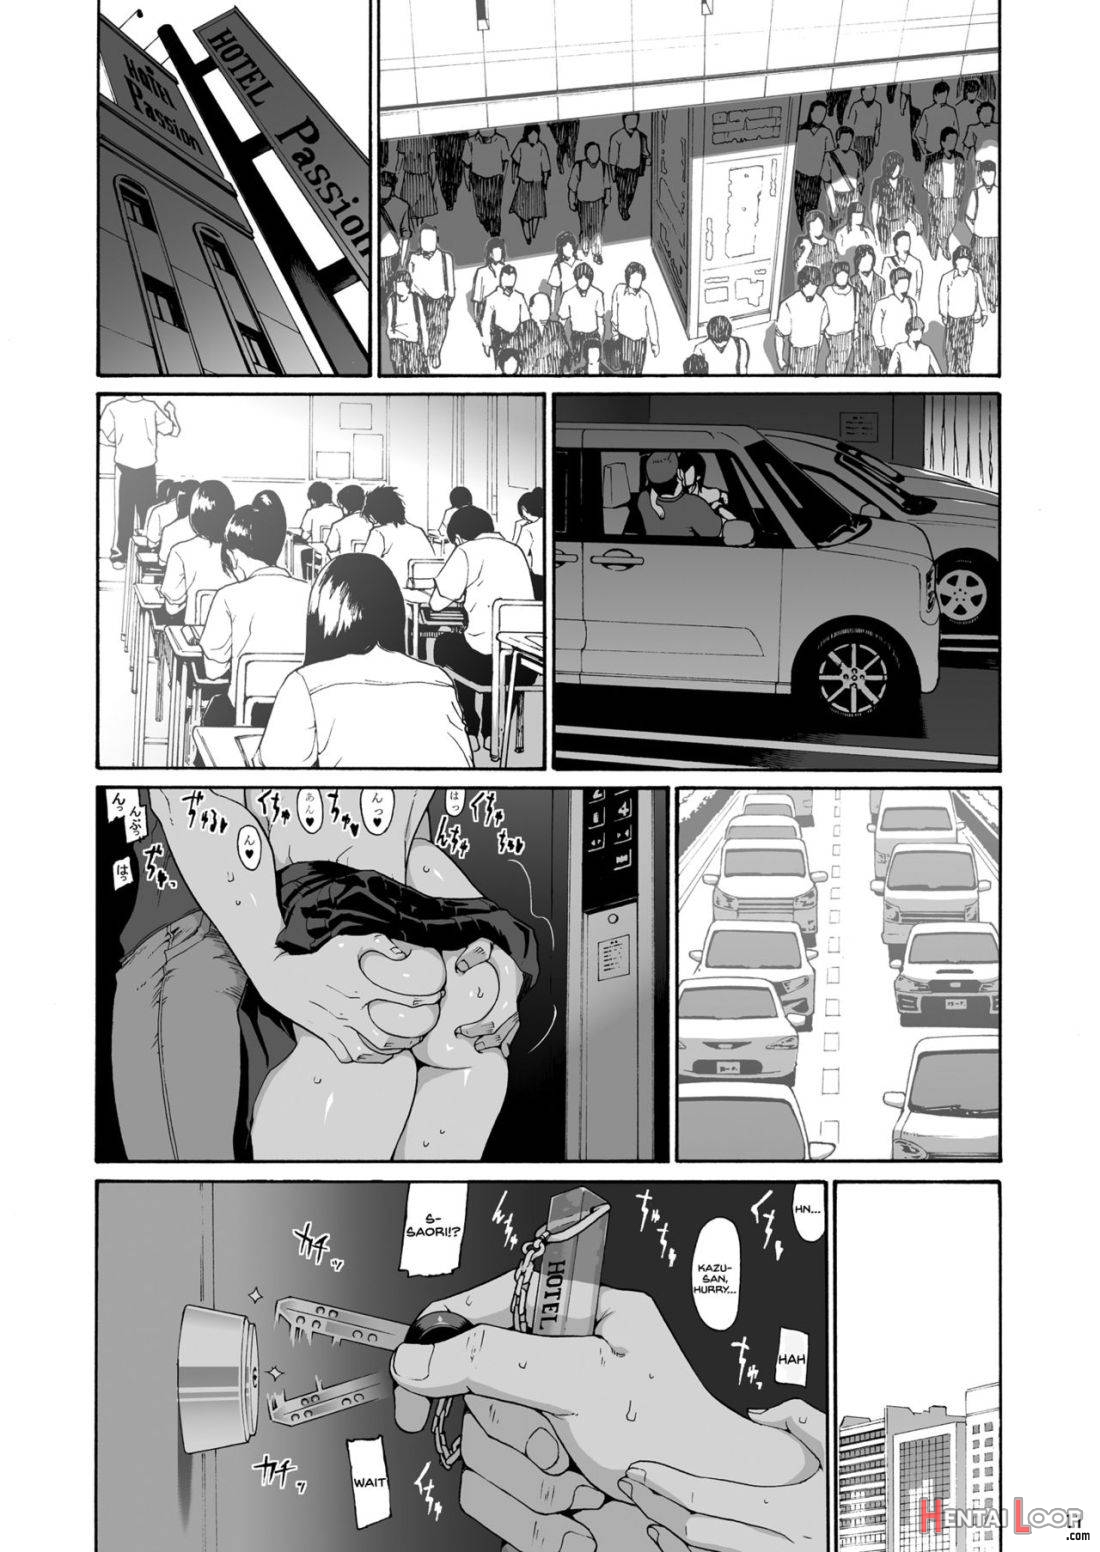 Shinyuu no Musume Saori [Kinyoubi, Asa 9:00, LoveHo…] page 9